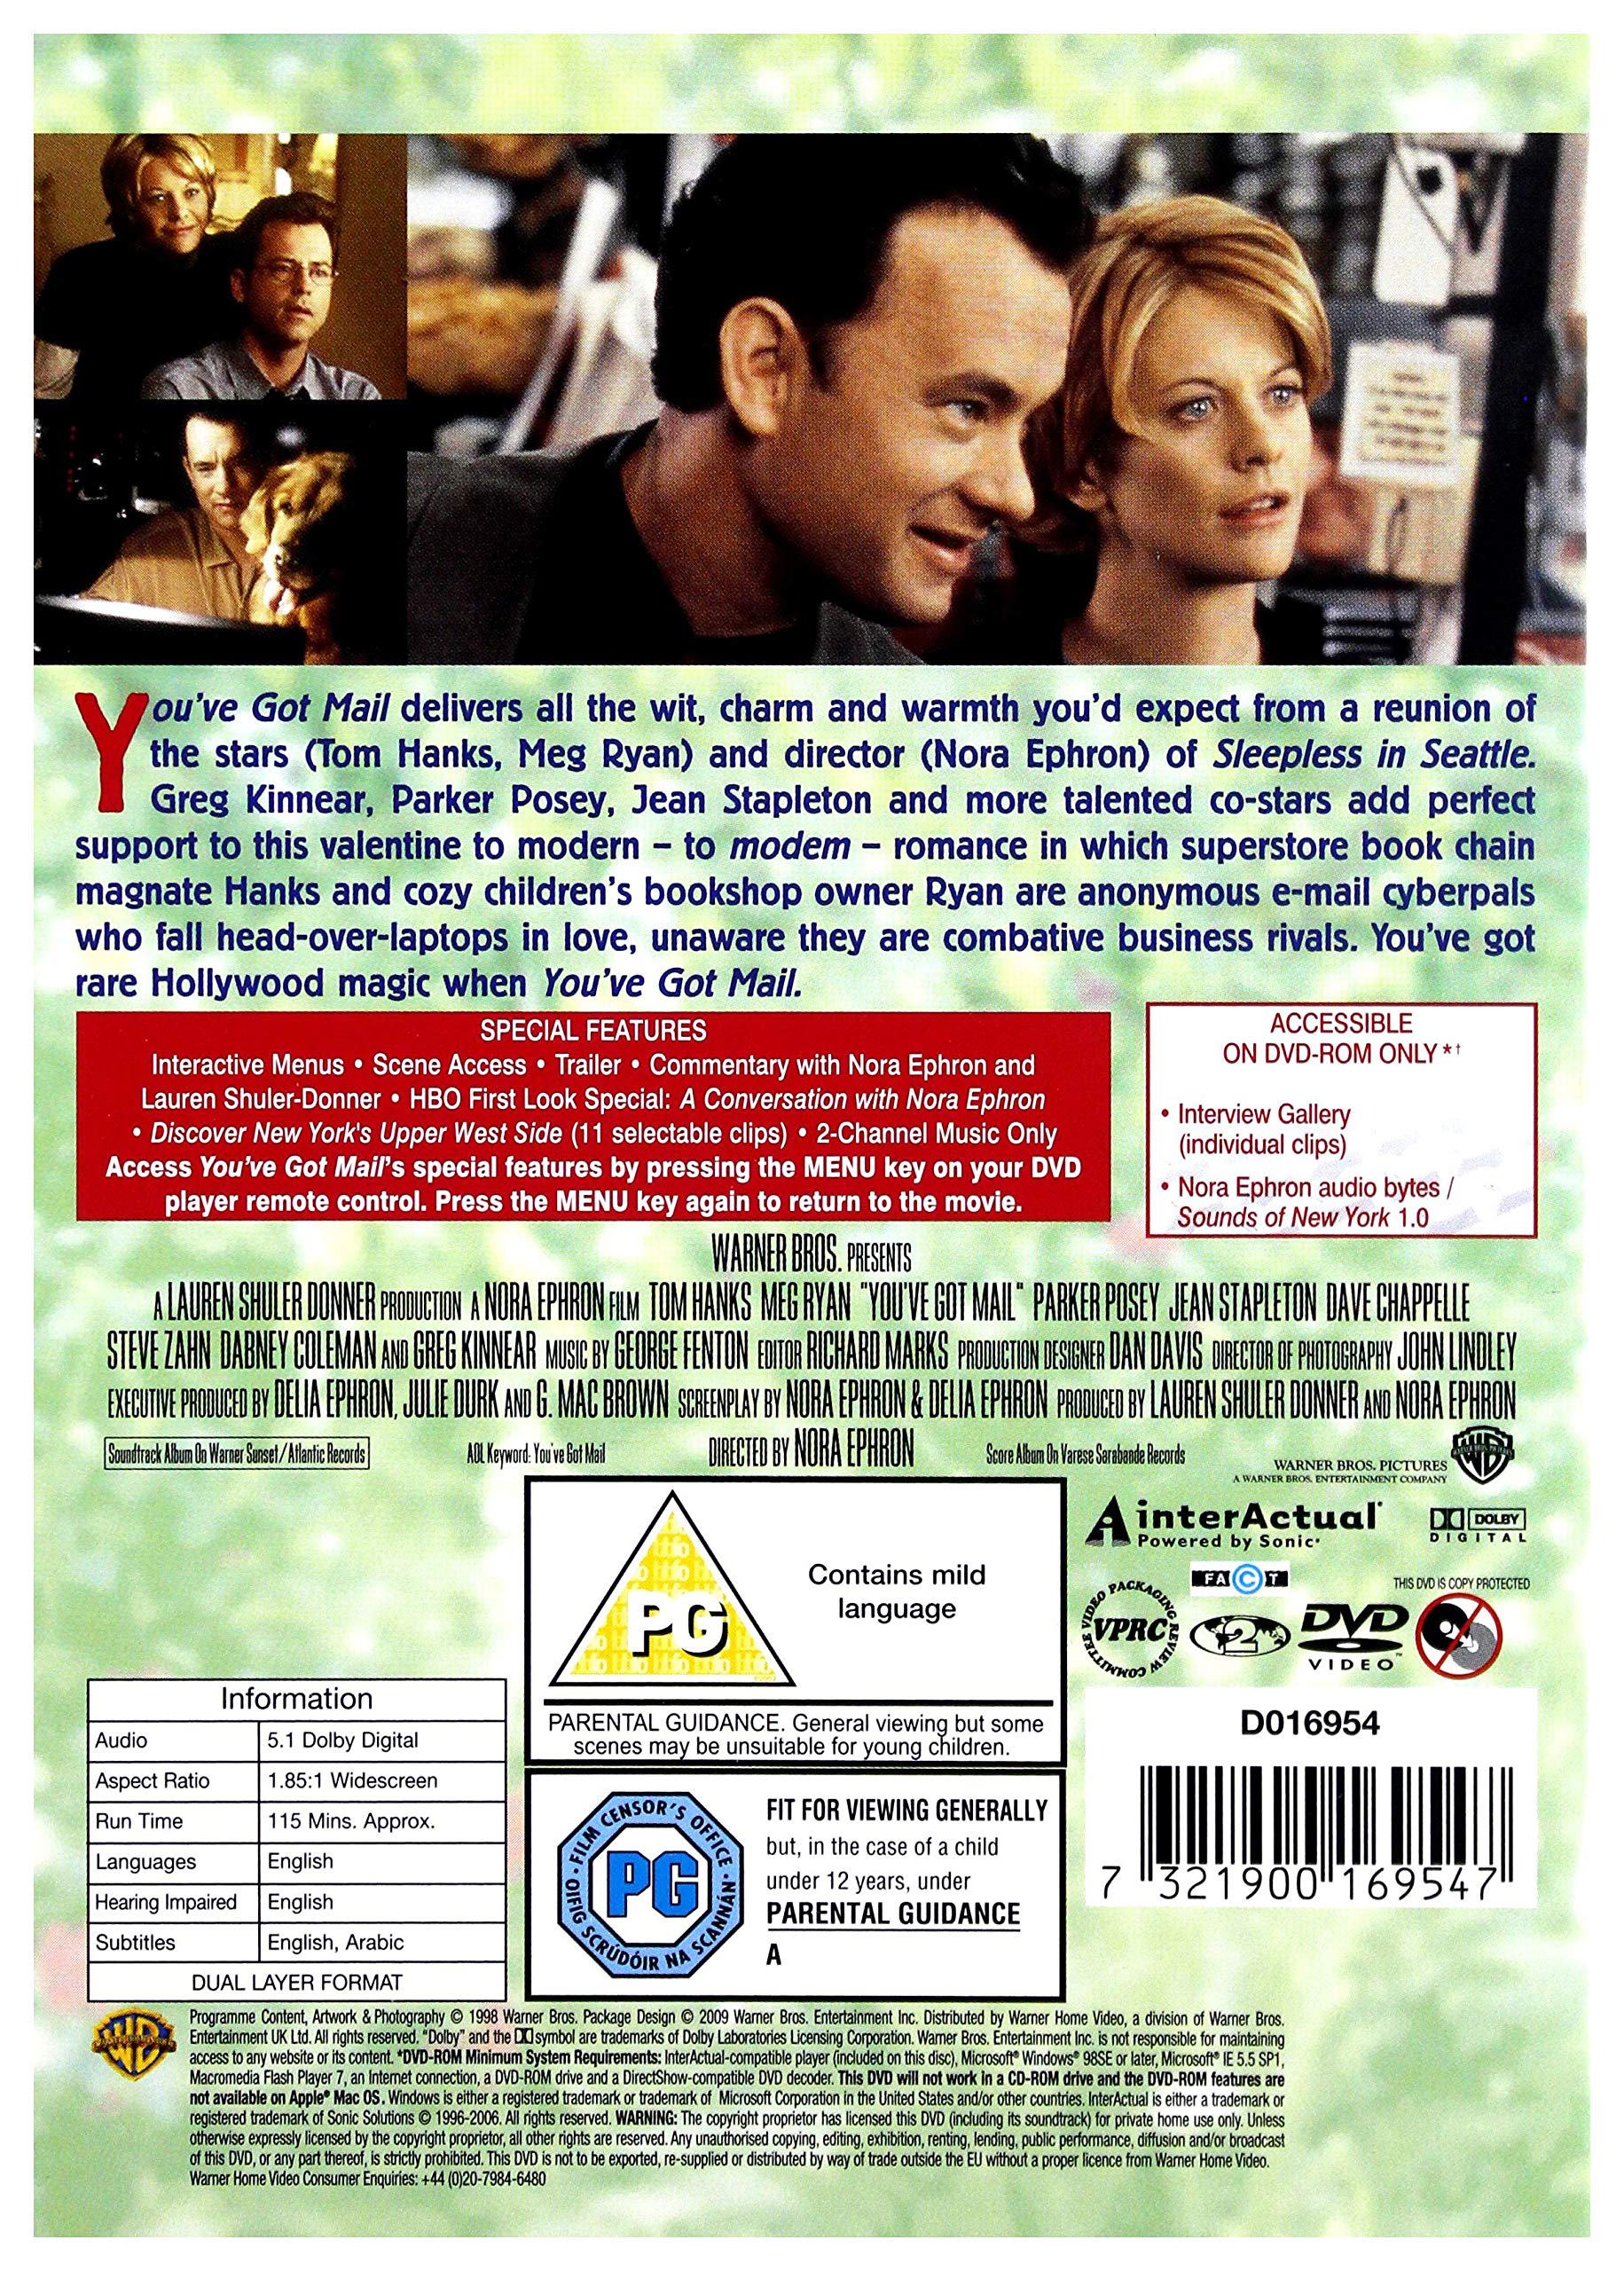 You've Got Mail [DVD] [1998]